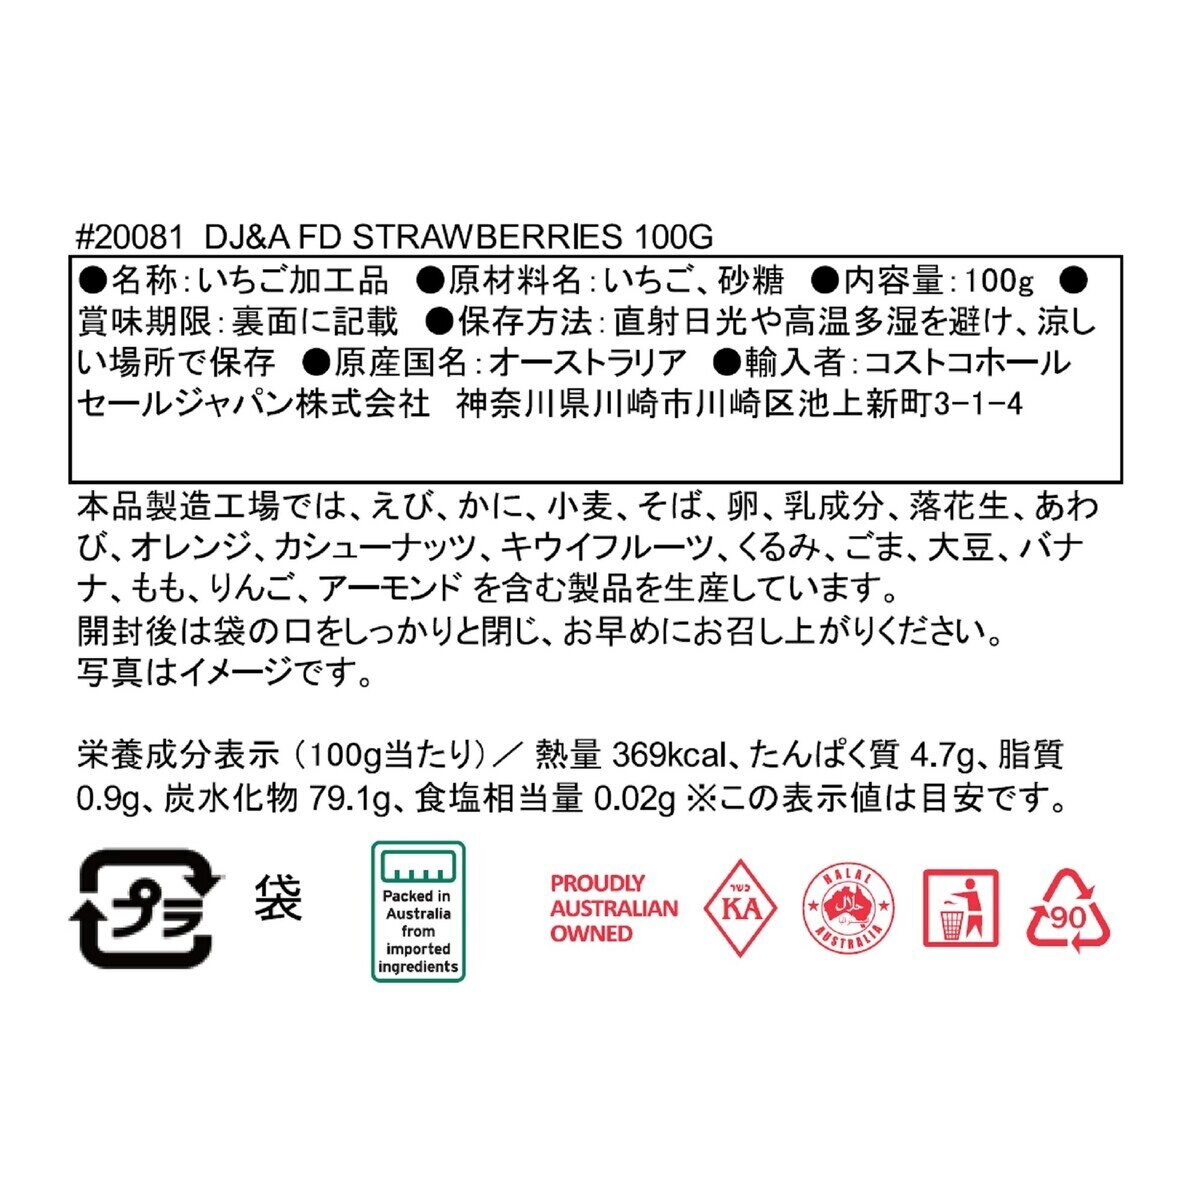 DJA フリーズドライ ストロベリー 100g | Costco Japan